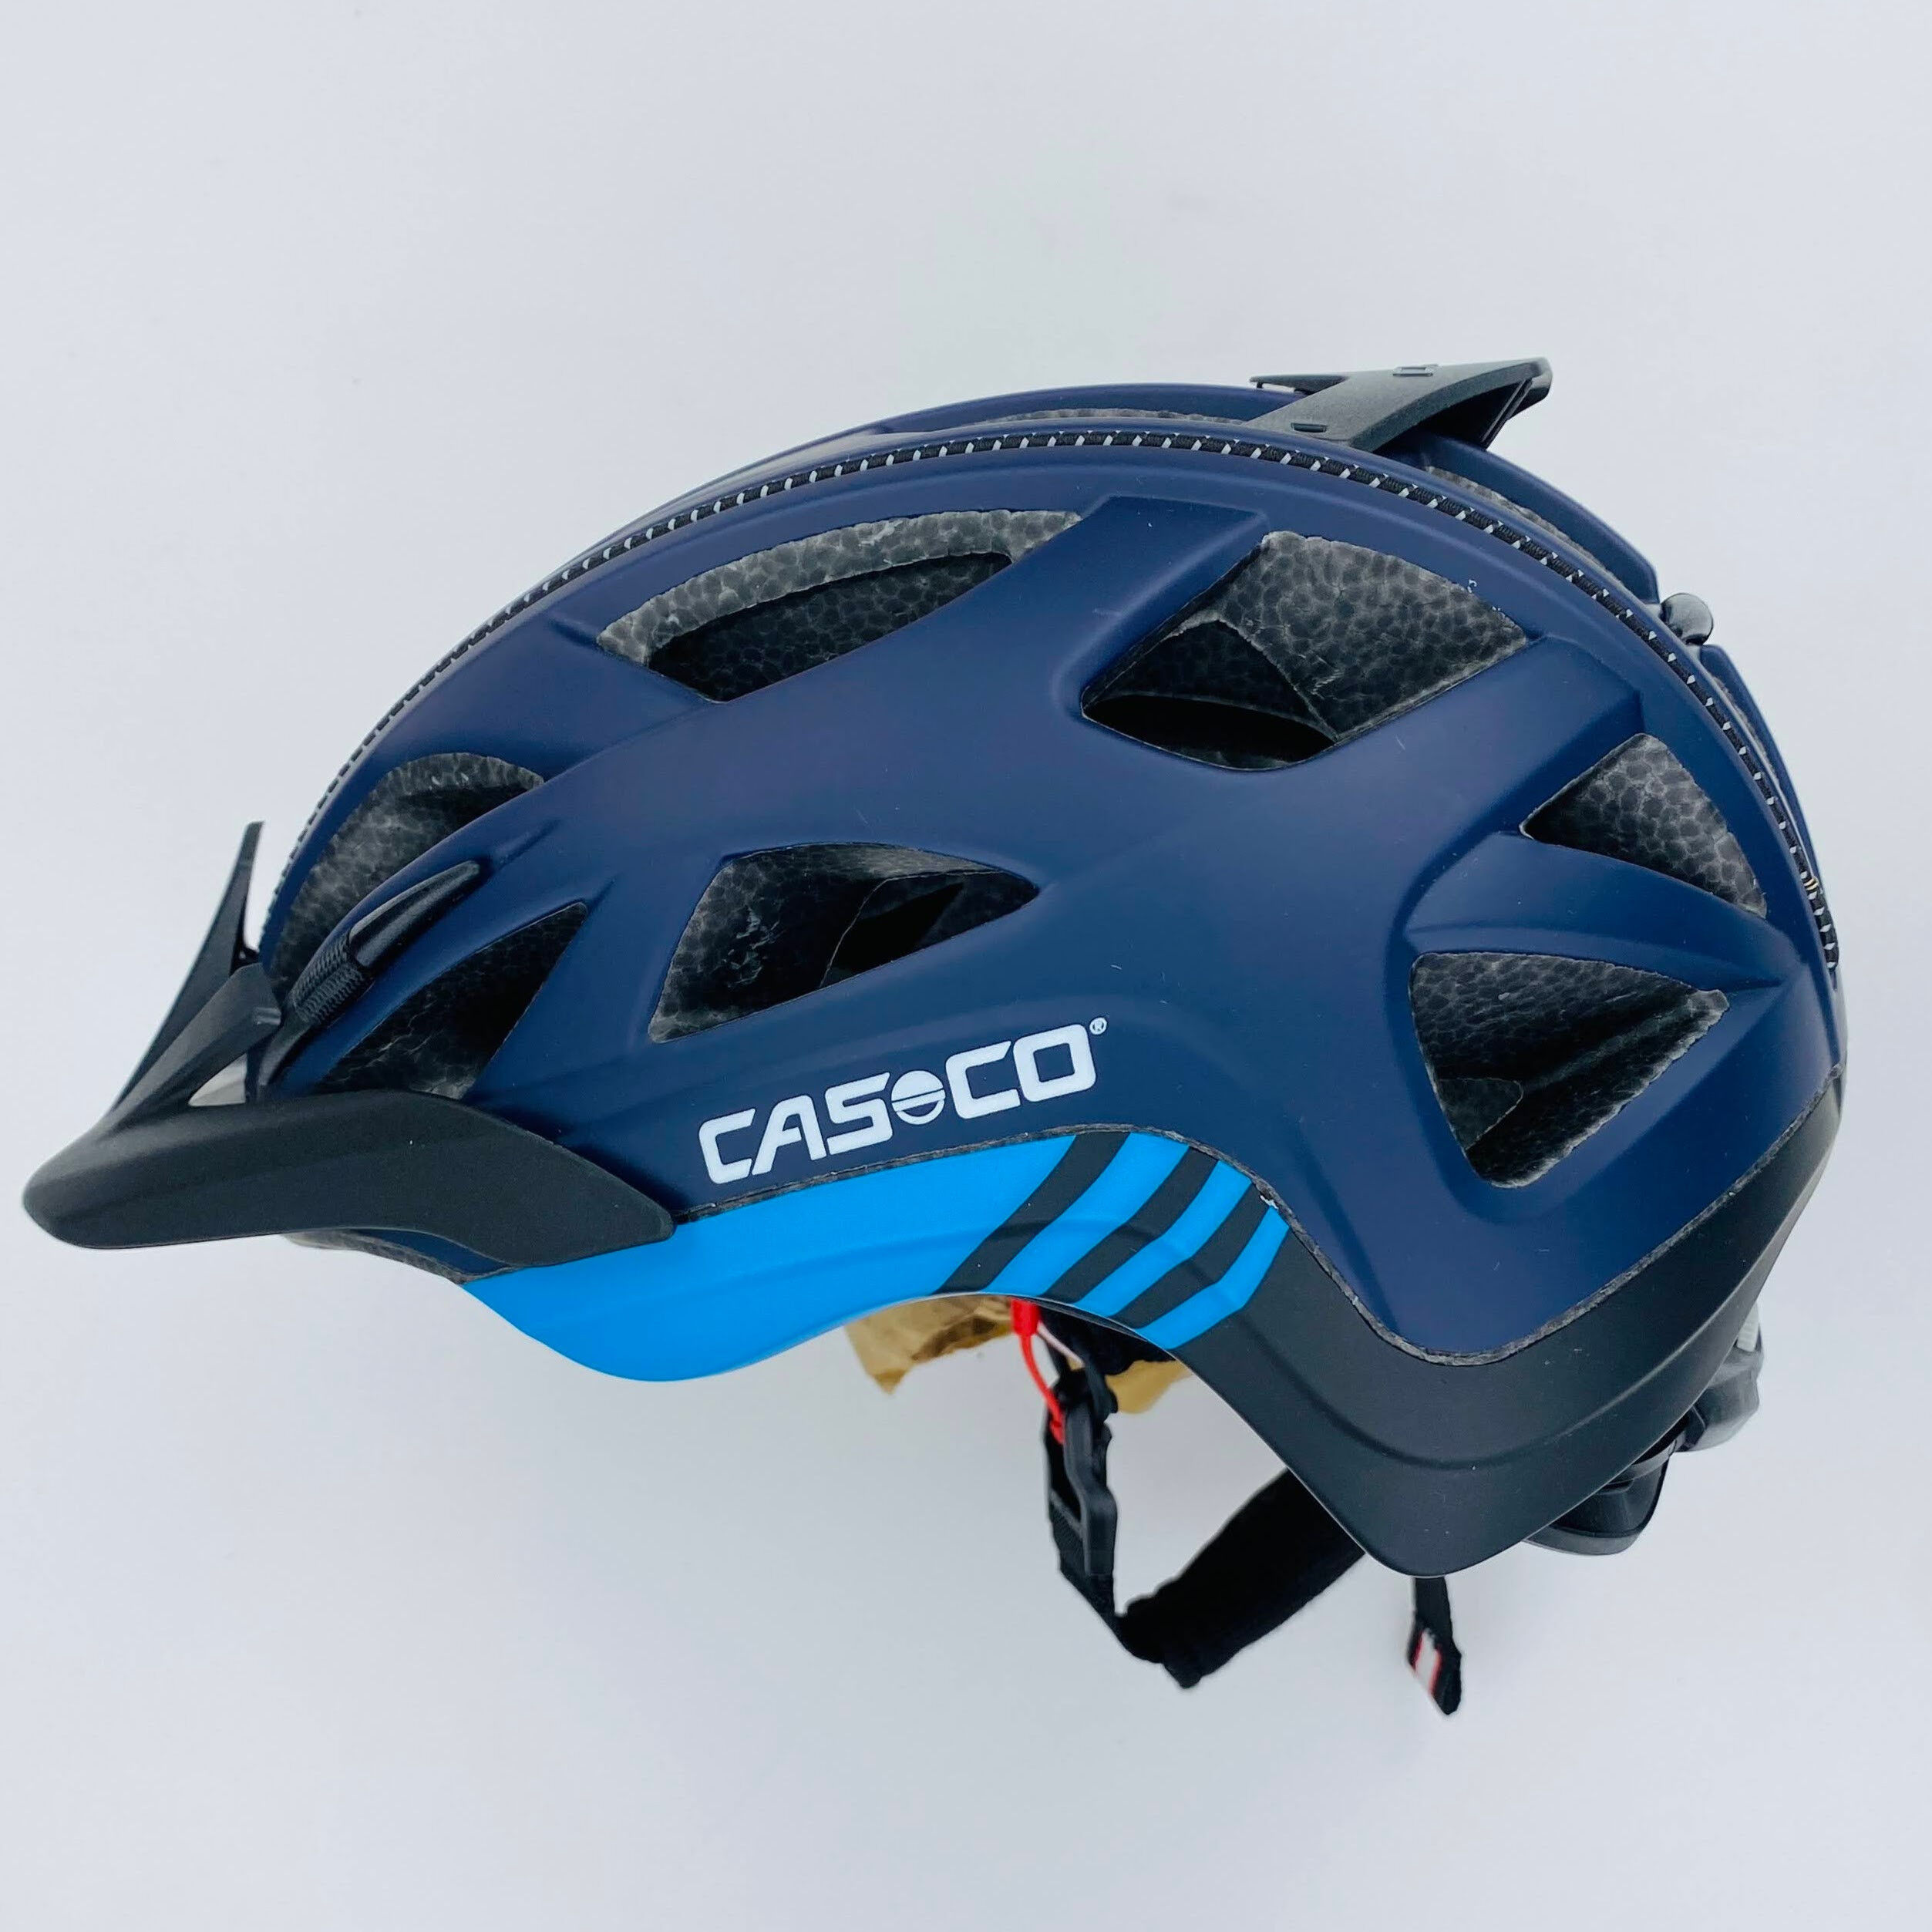 Casco Activ 2 - Second hand Fahrradhelm - Blaues Öl - 52-56 cm | Hardloop